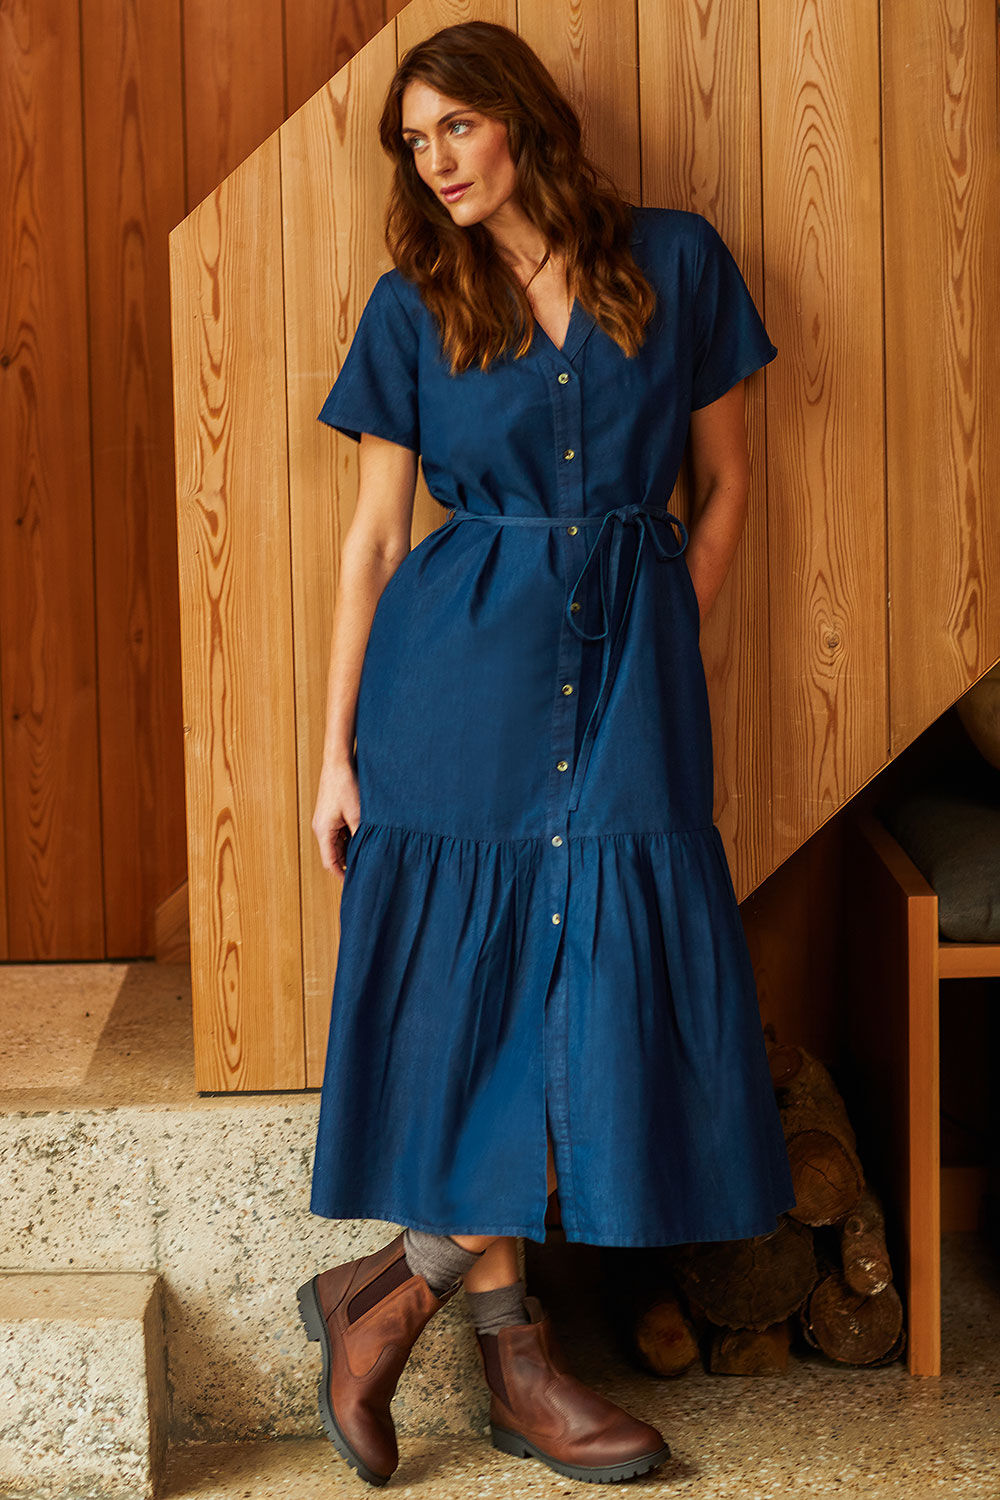 Autonomy Women’s Blue Cotton Denim Shirt Dress with Collar Neckline, Size: M